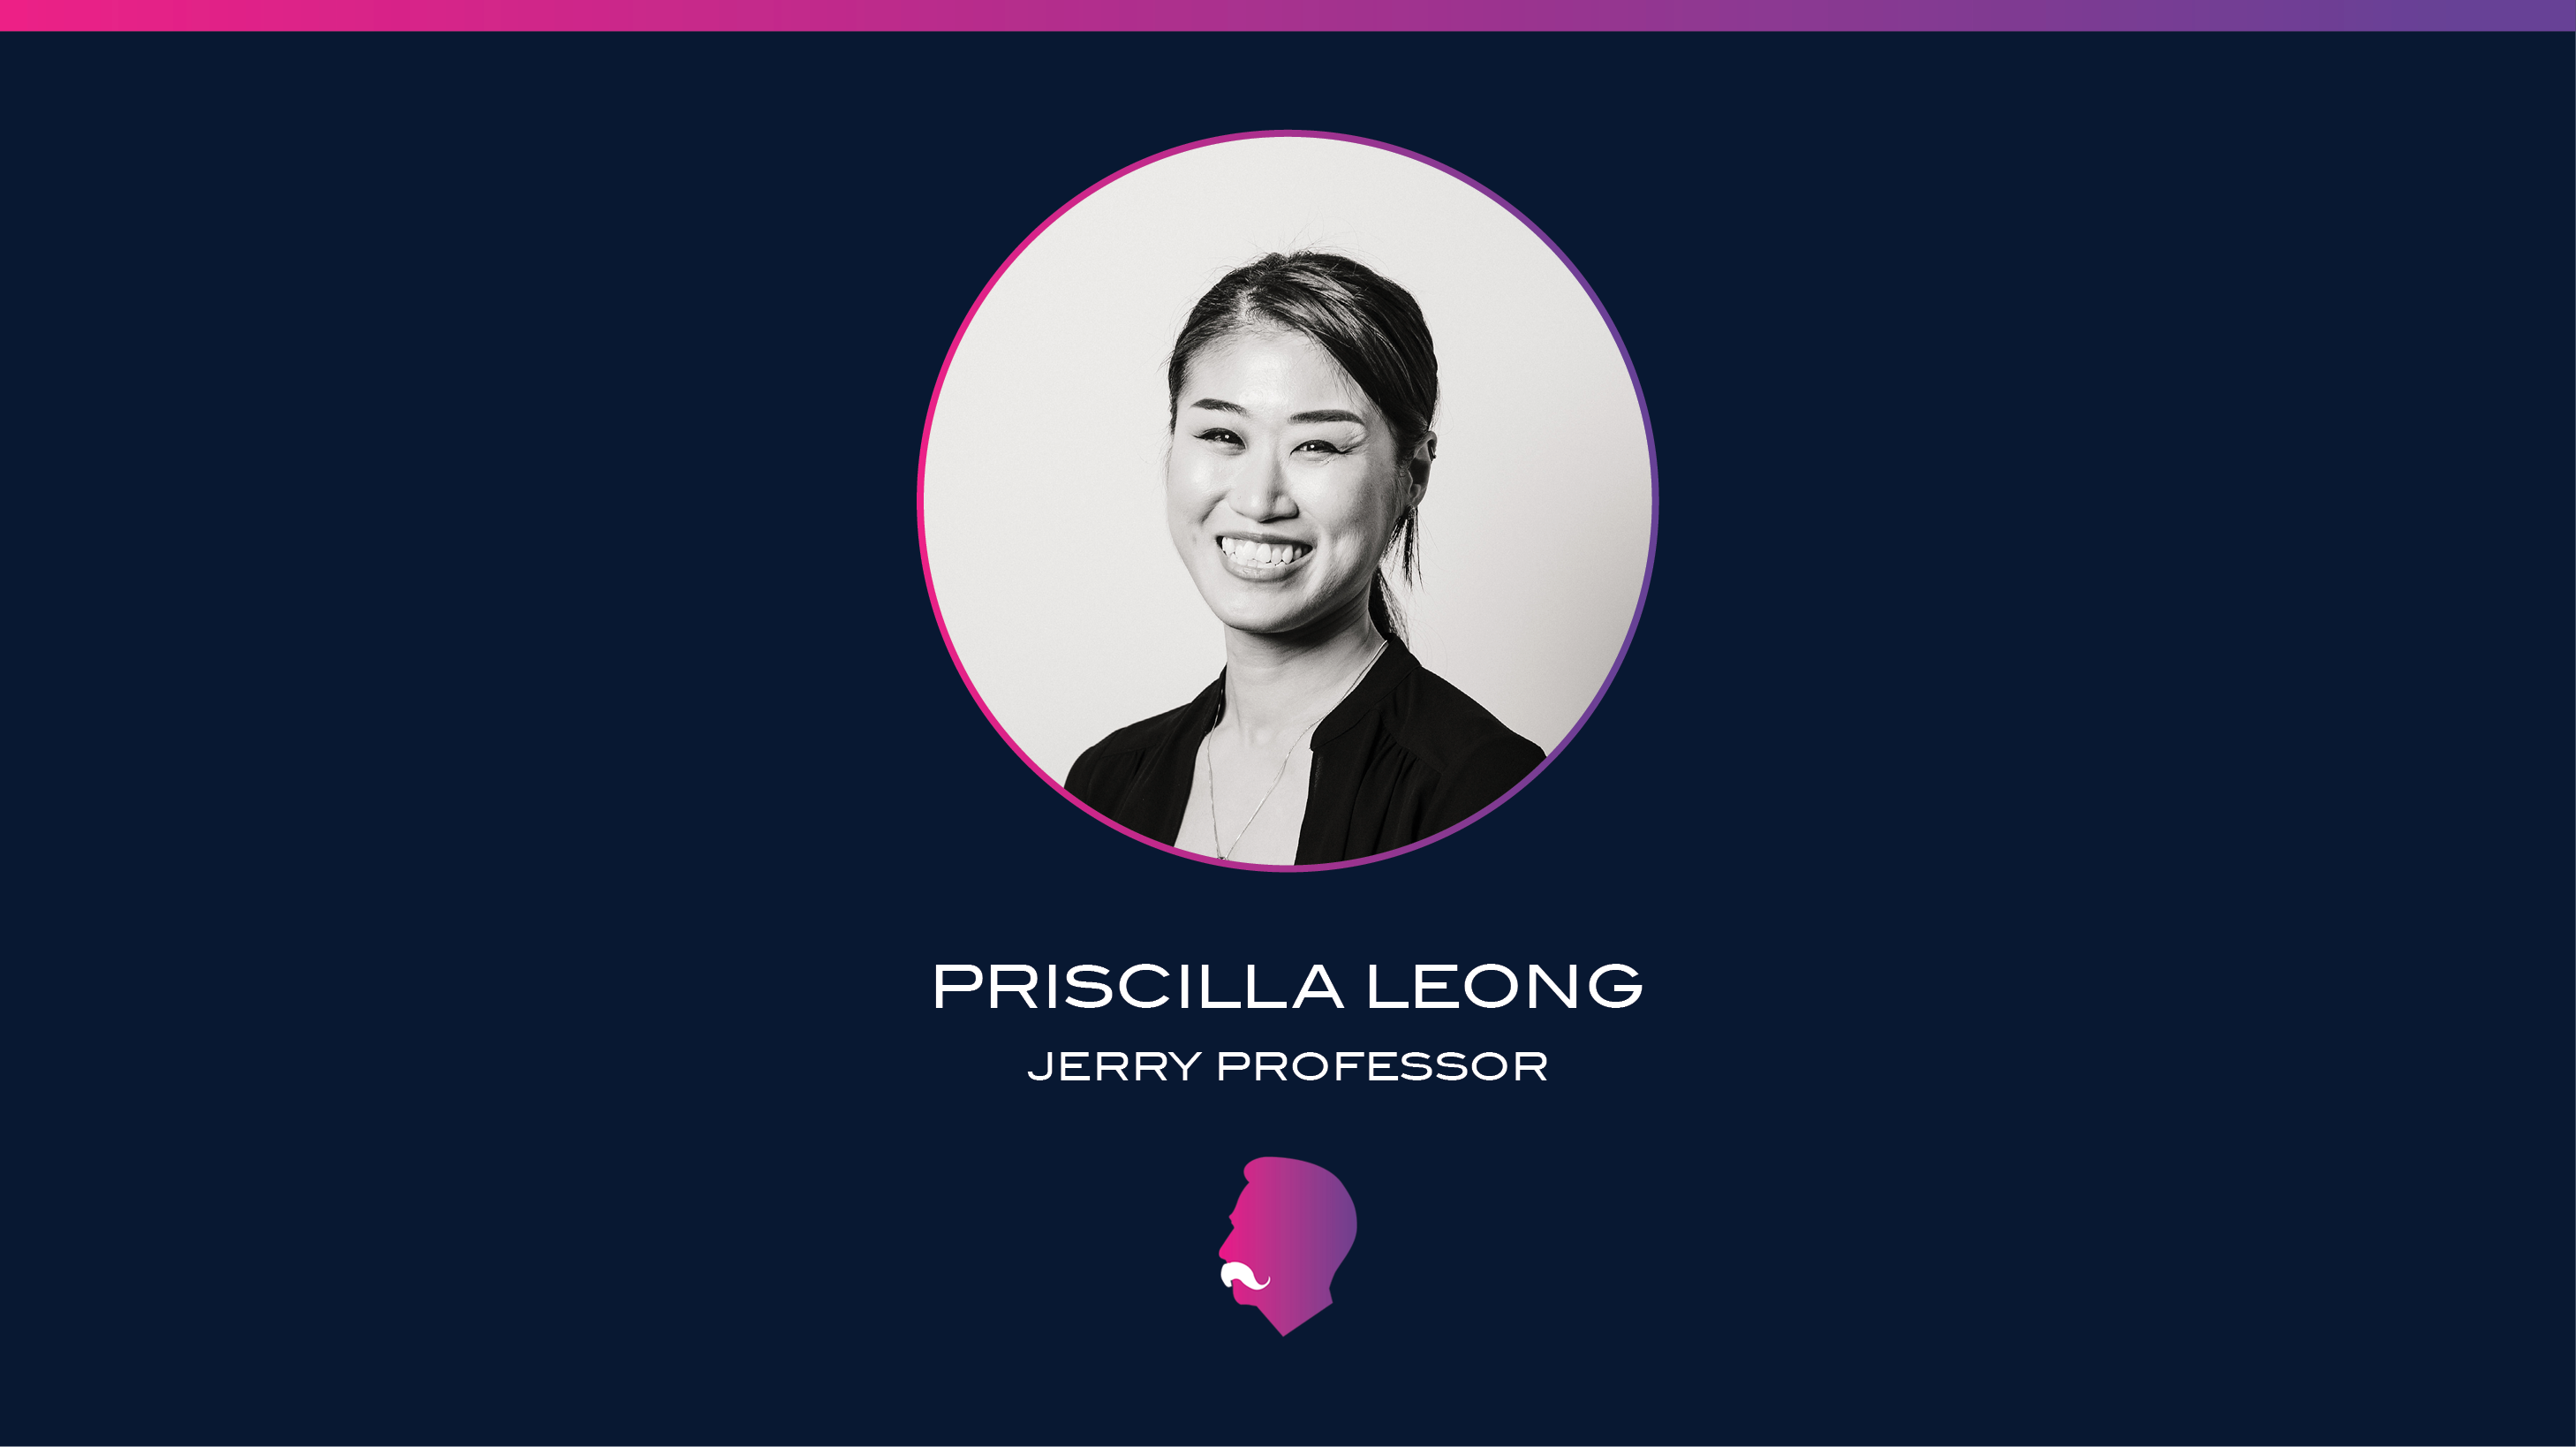 Welcome JERRY Professor, Priscilla Leong